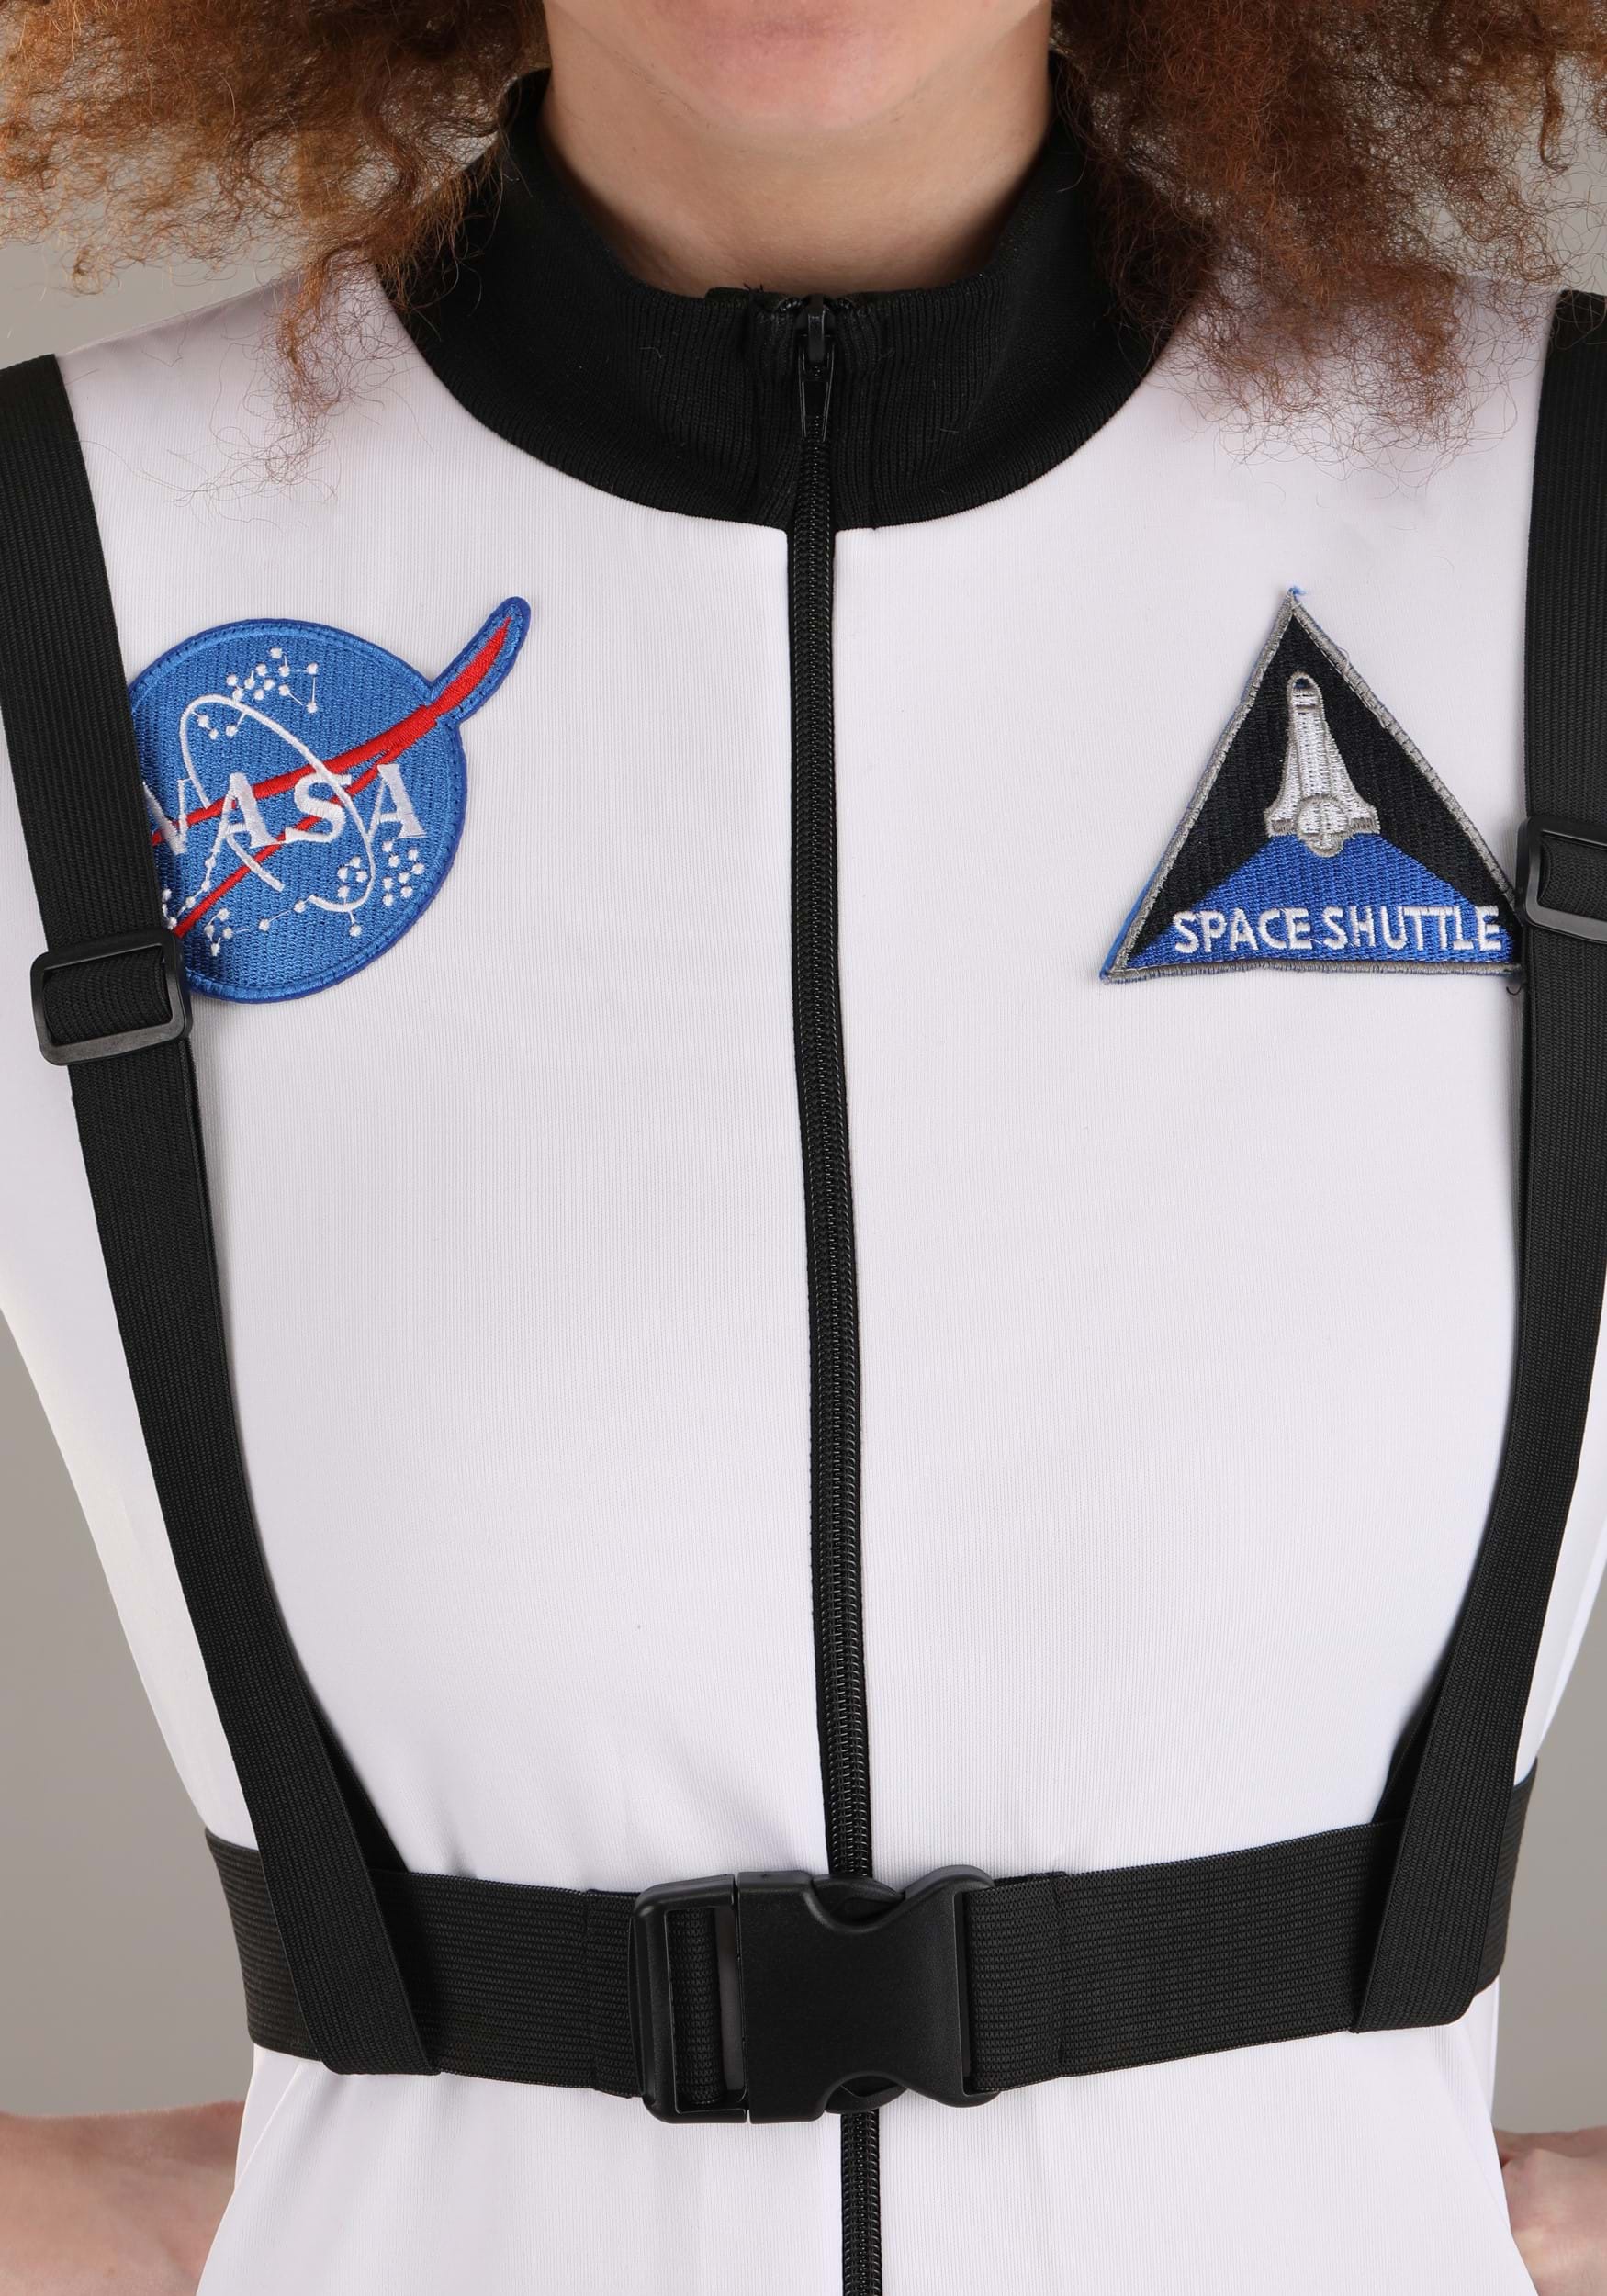 Plus Size White Astronaut Costume , Plus Size Halloween Costumes